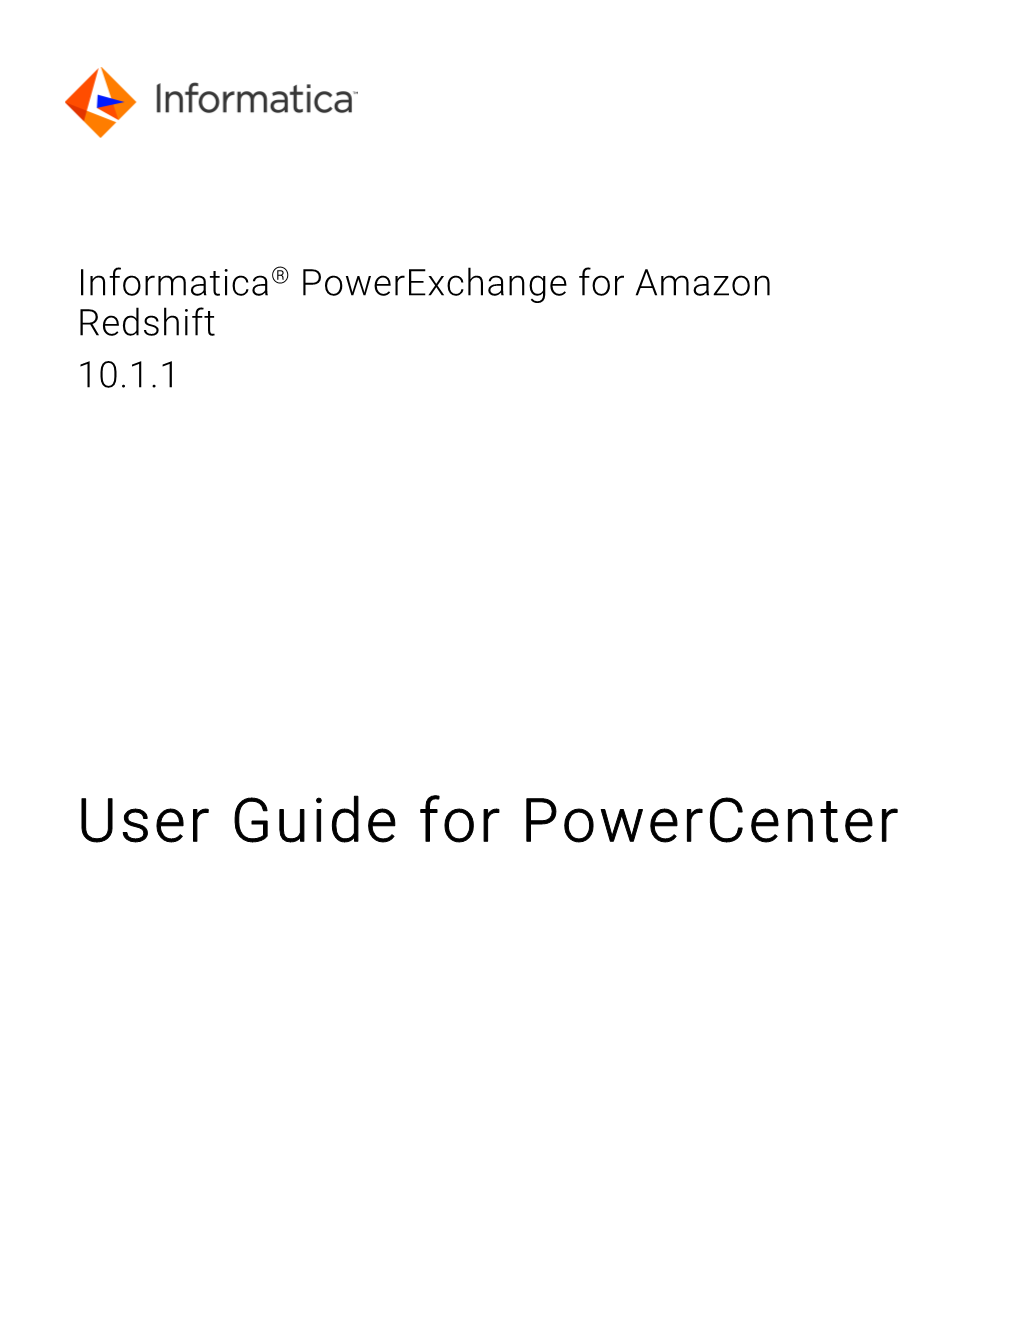 Informatica Powerexchange for Amazon Redshift